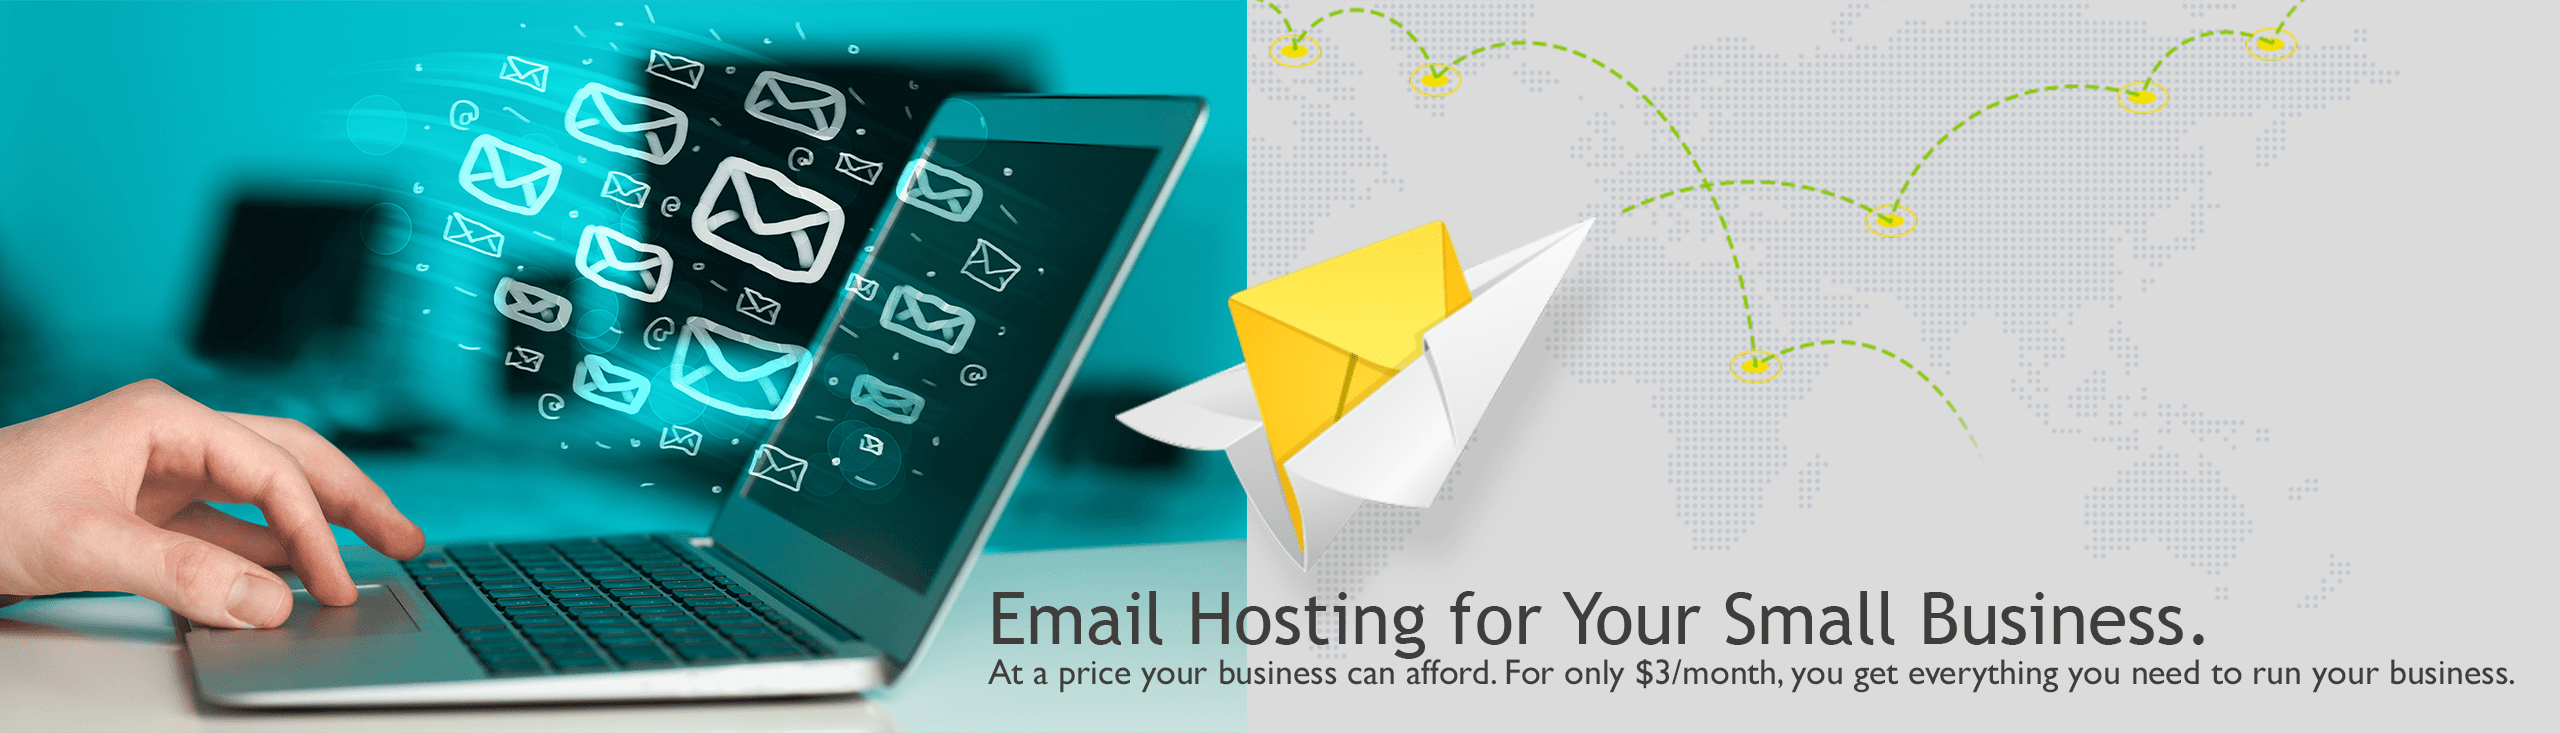 email hosting slide